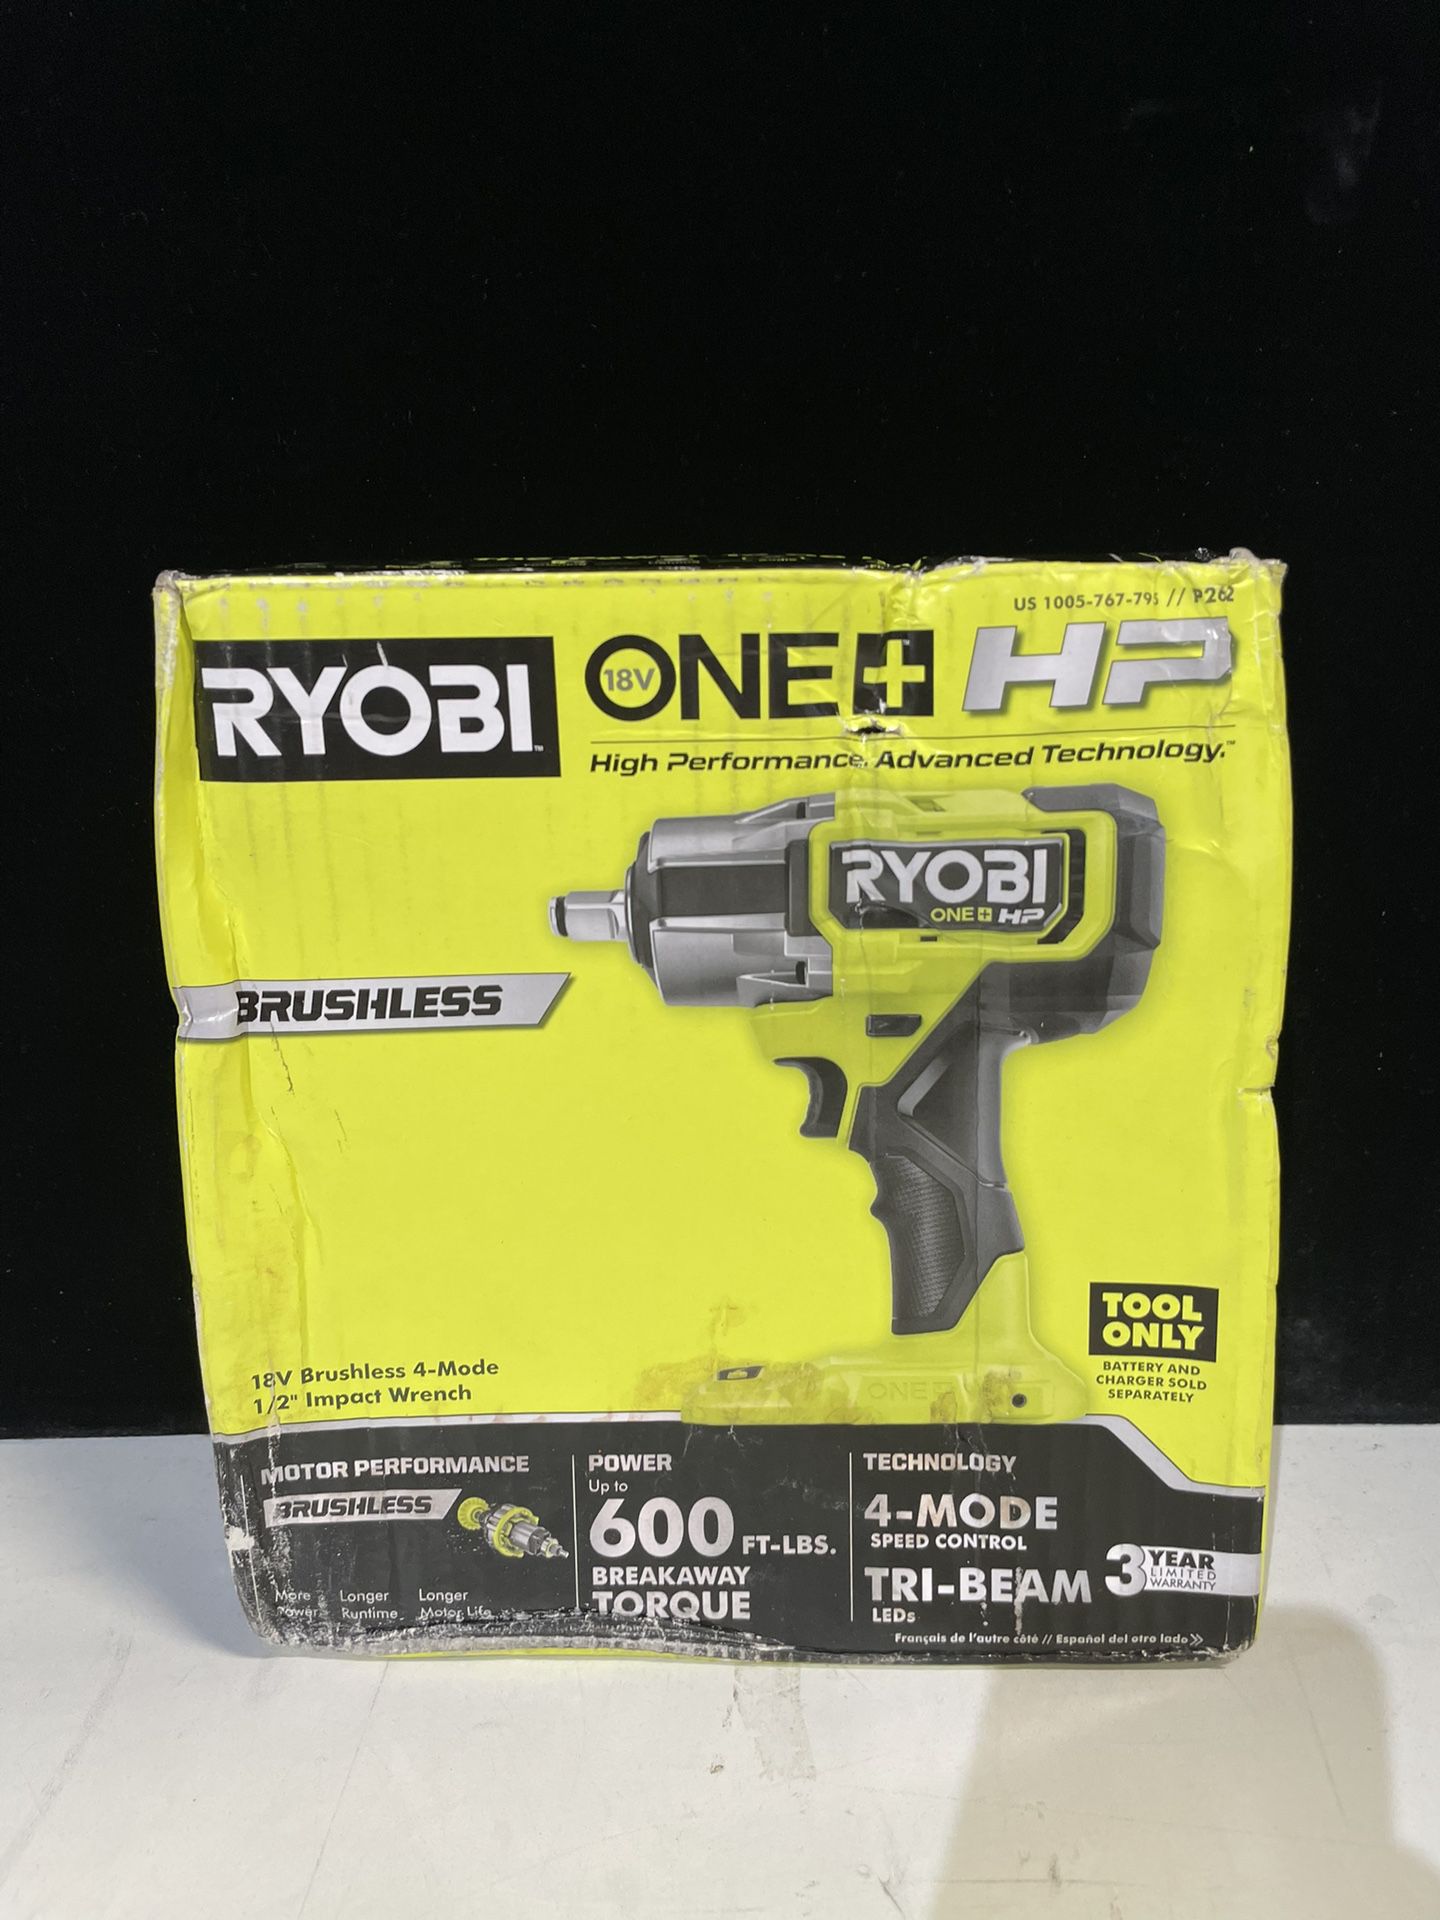 Ryobi P262 1/2” 18V Impact Wrench (Bare Tool Only)